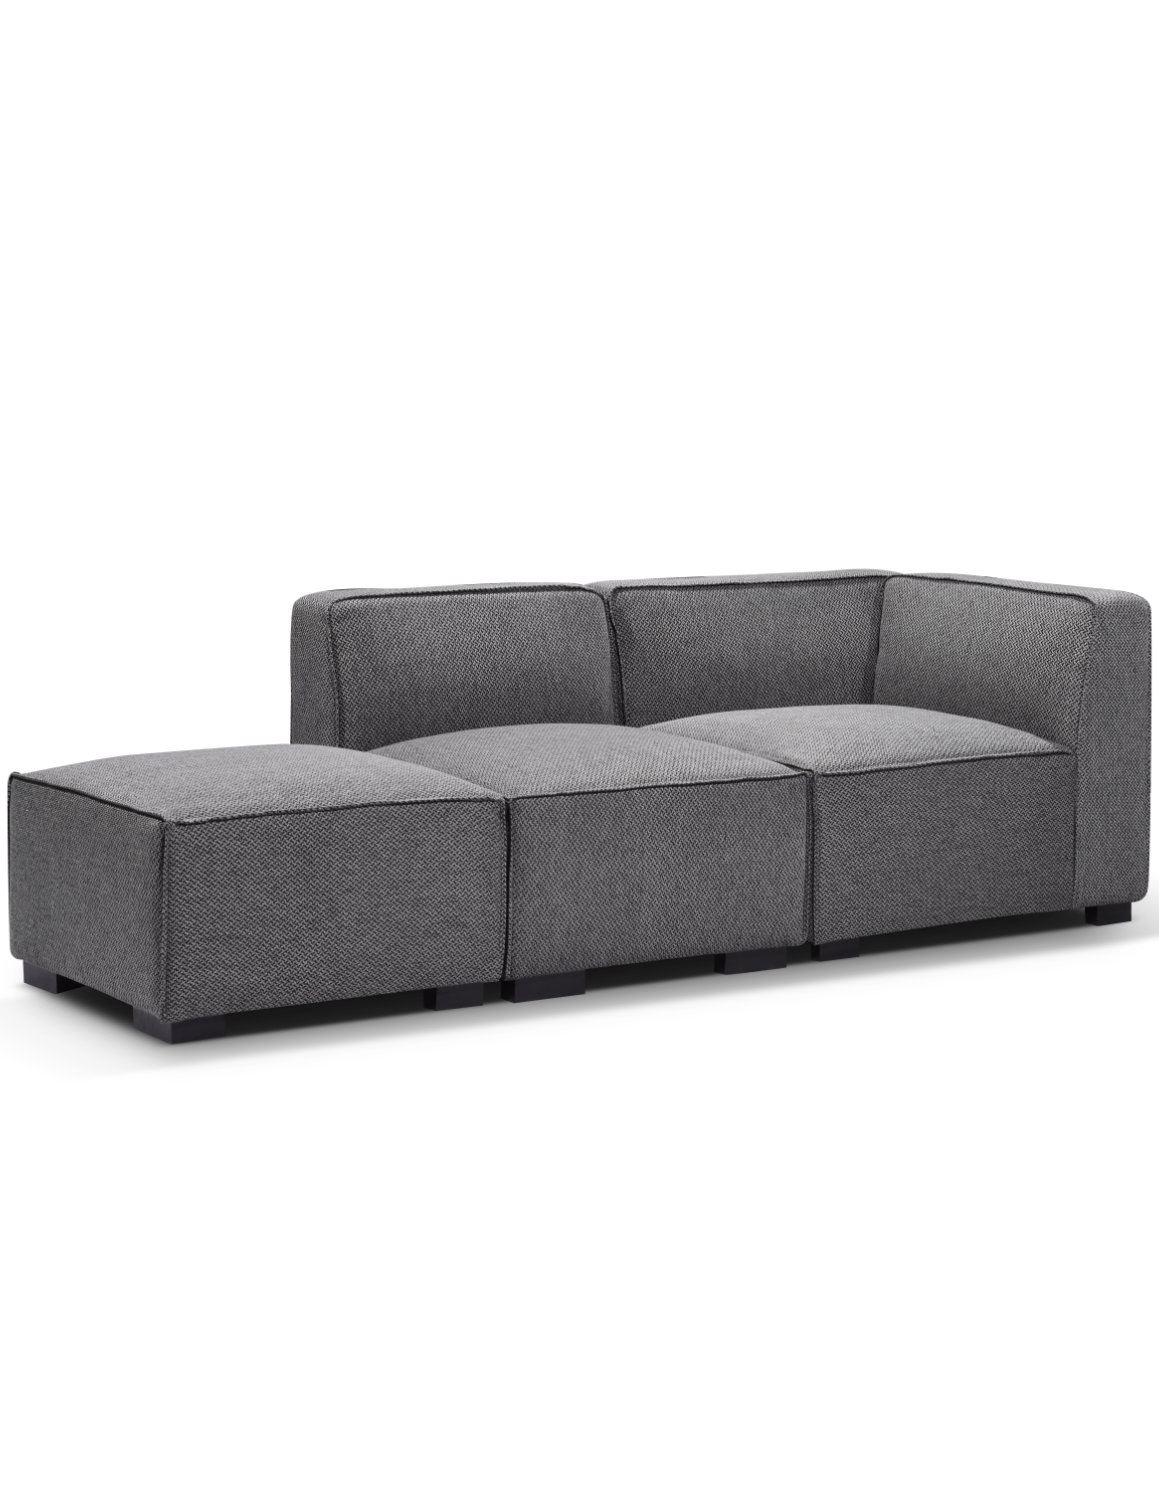 Soft Cube Contemporary Sofa 3 Seats